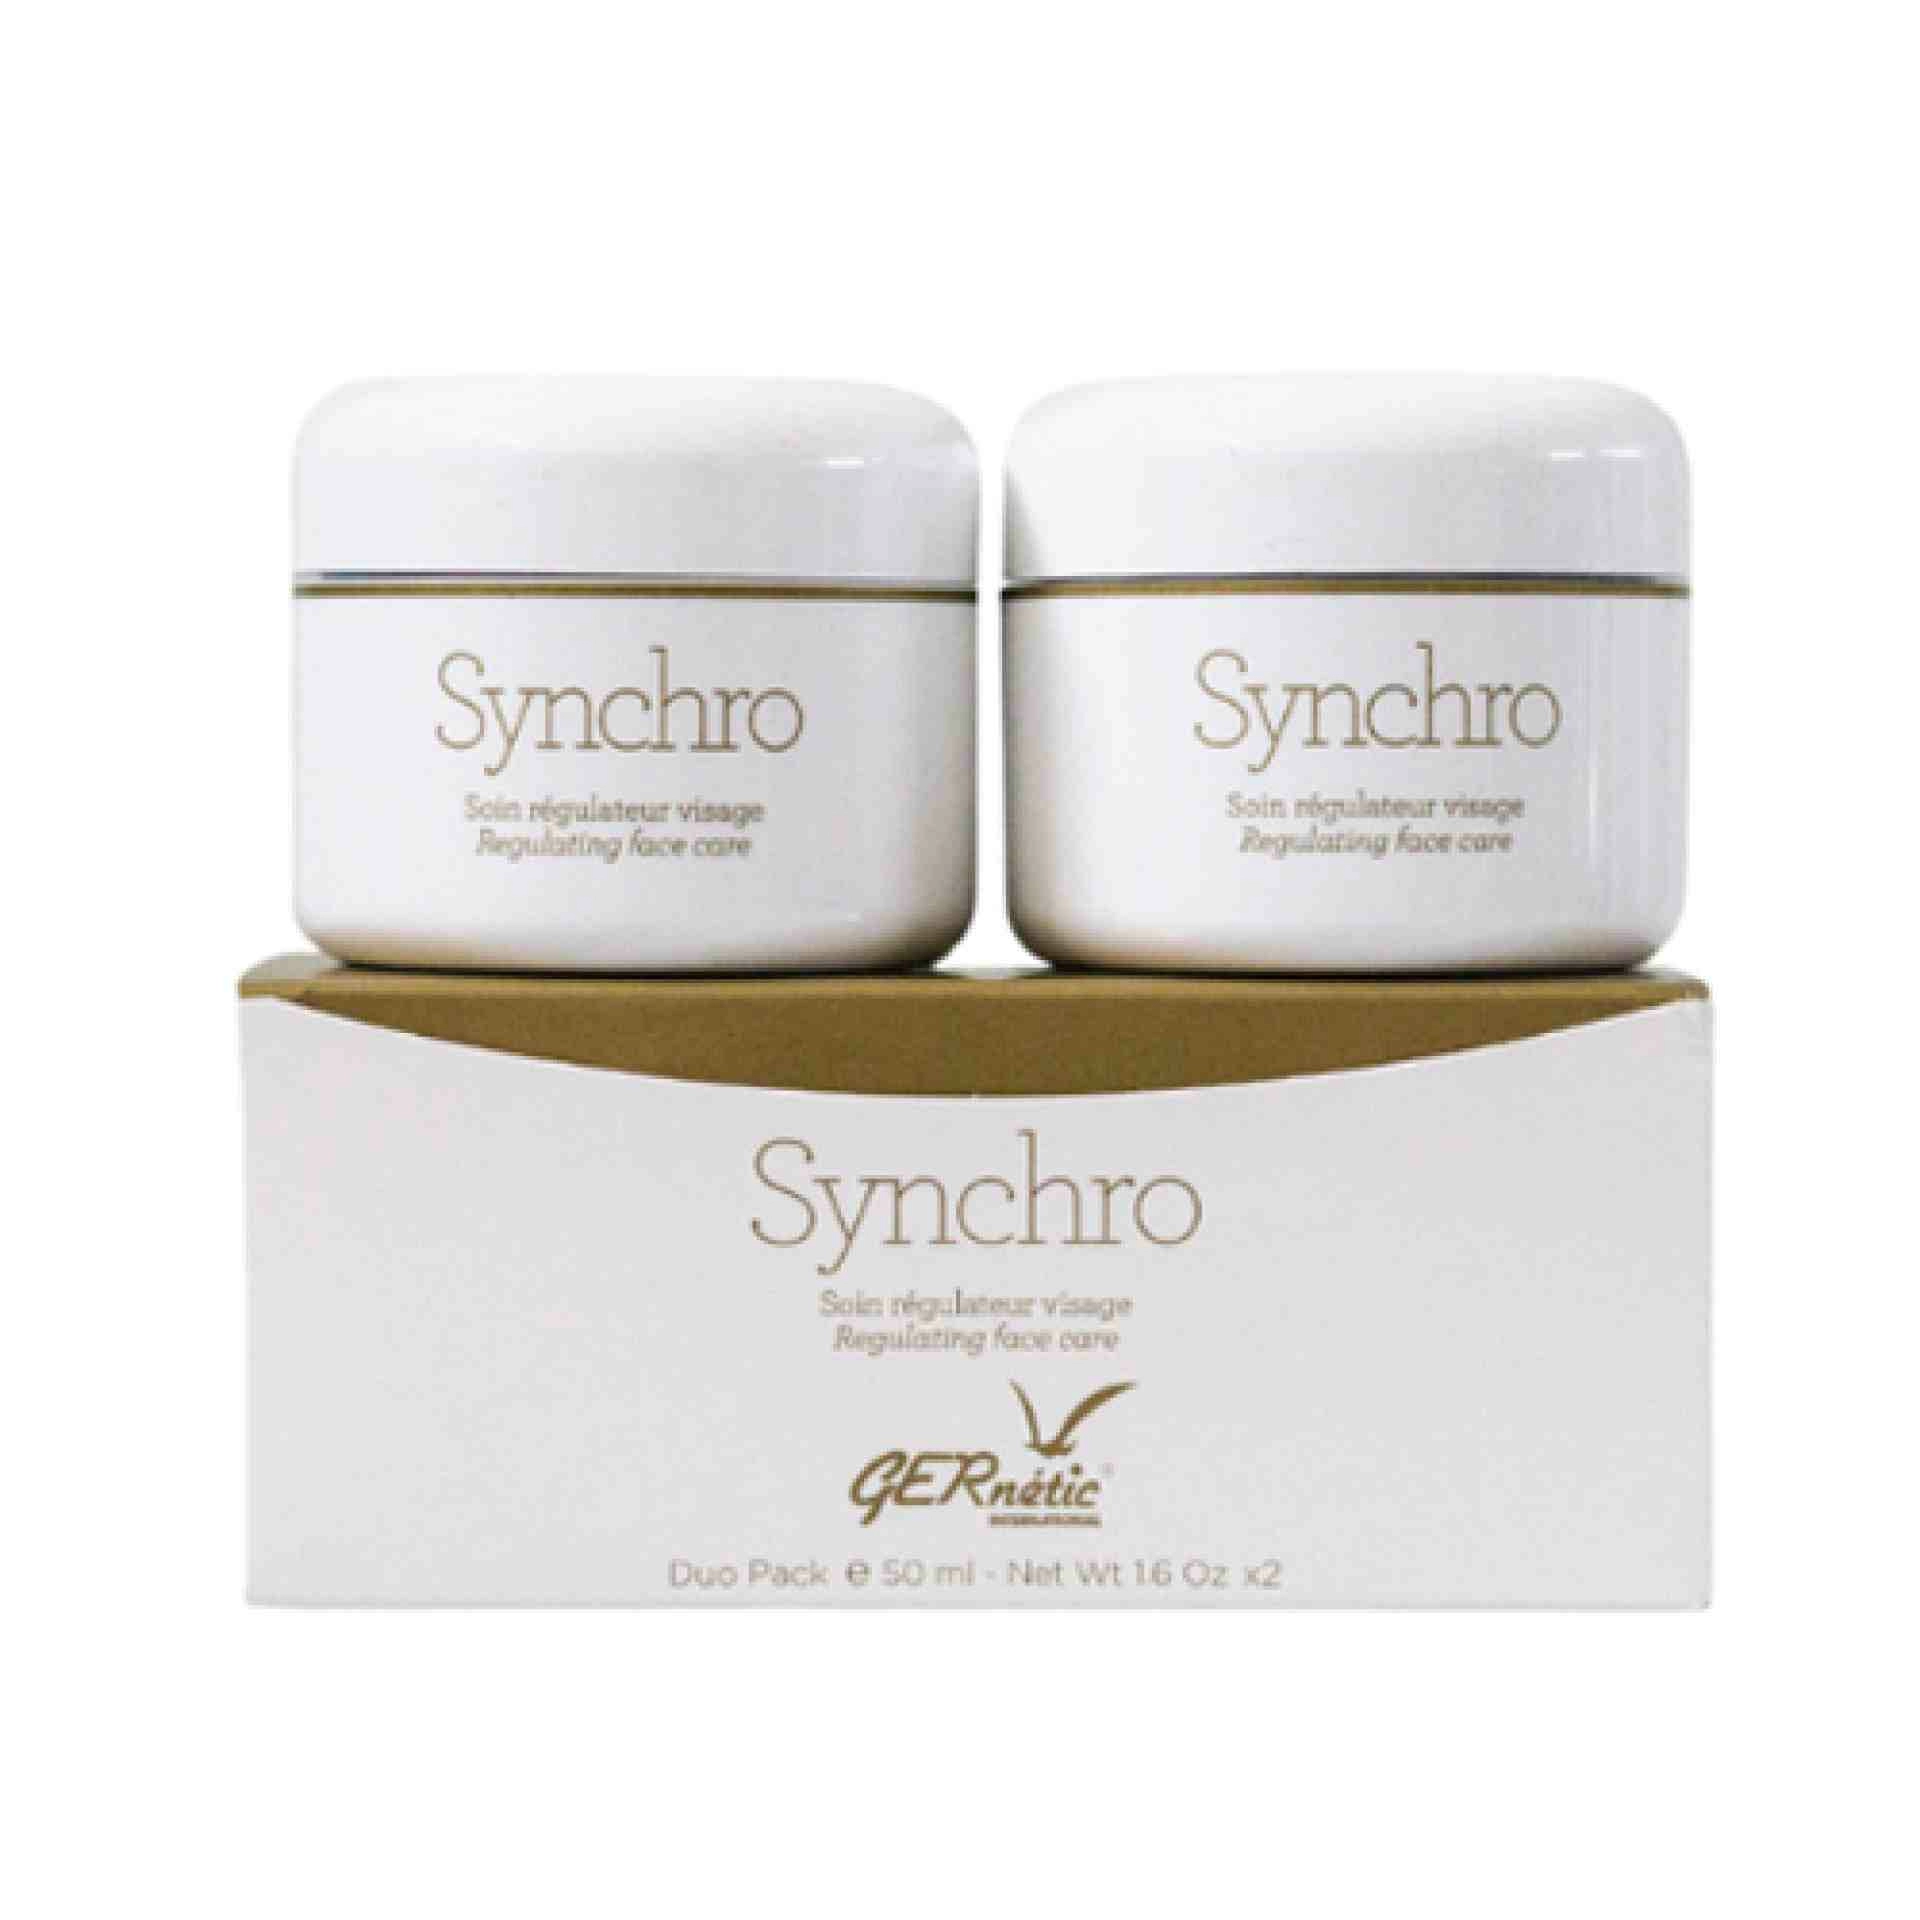 Synchro | Crema reguladora - Gernétic ®